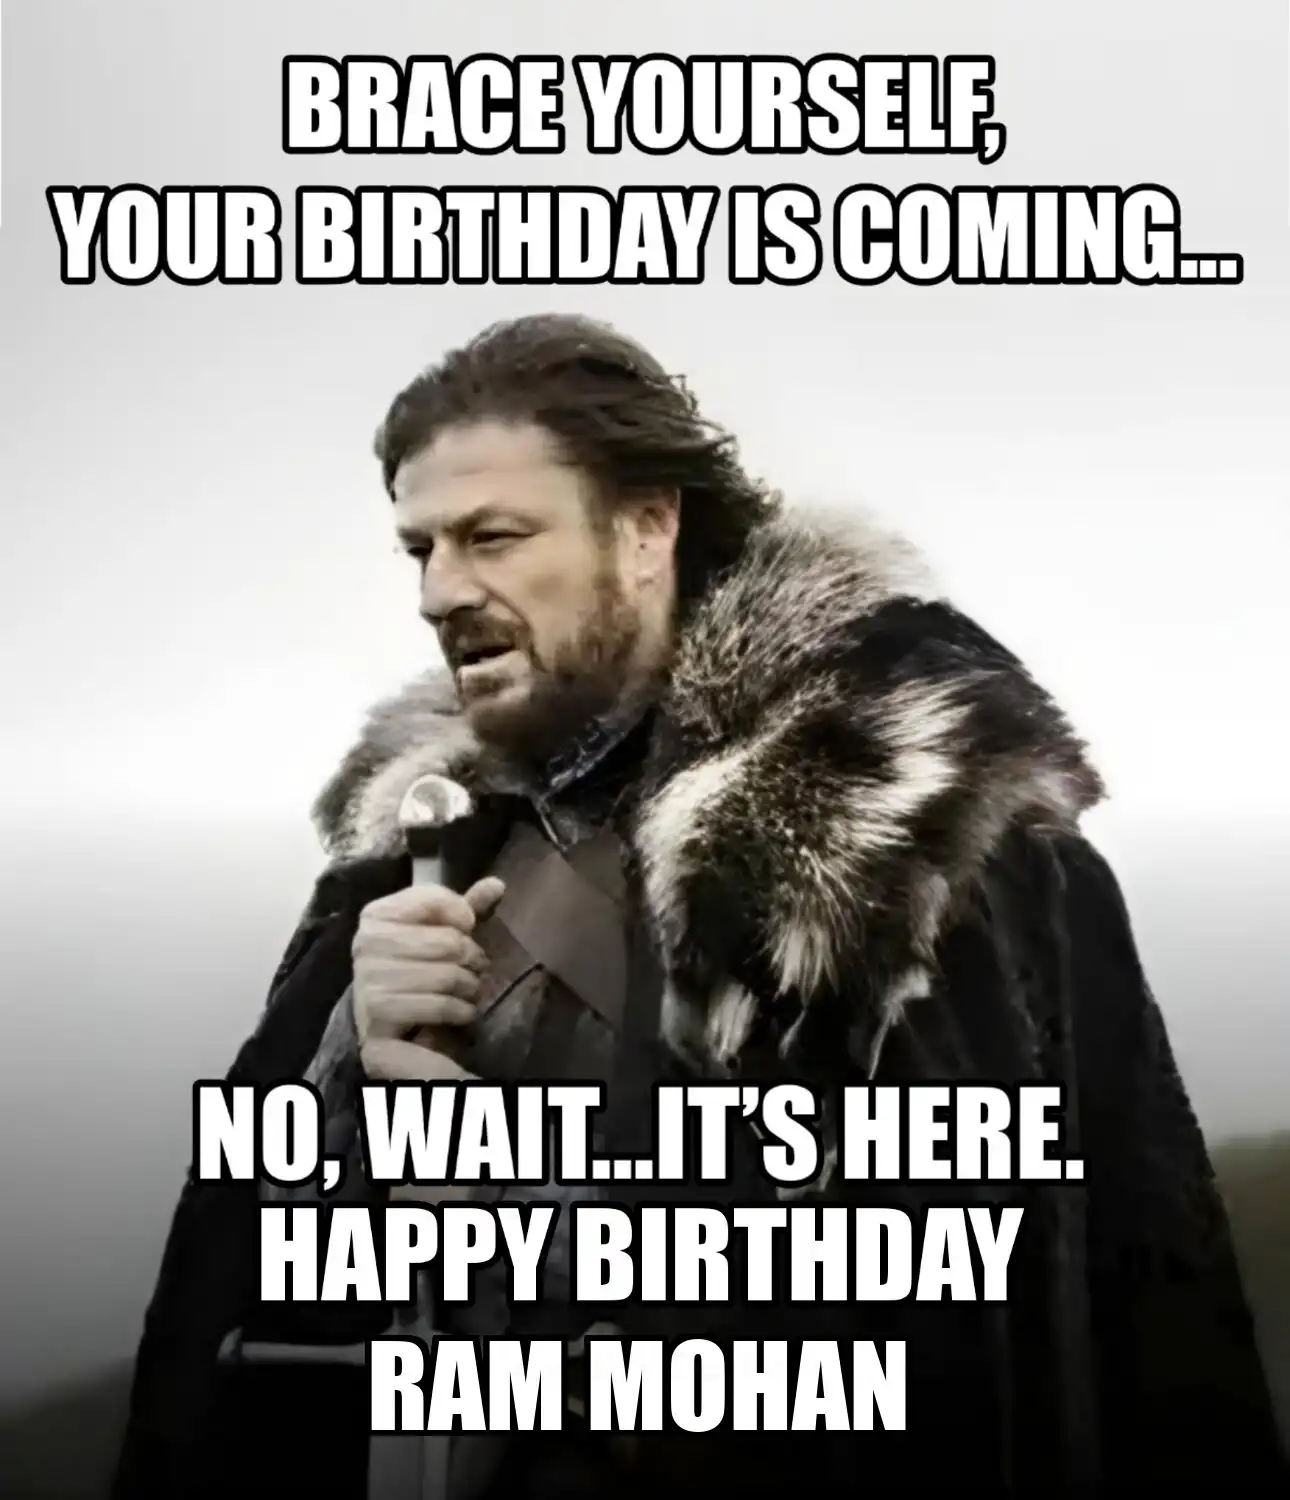 Happy Birthday Ram Mohan Brace Yourself Your Birthday Is Coming Meme